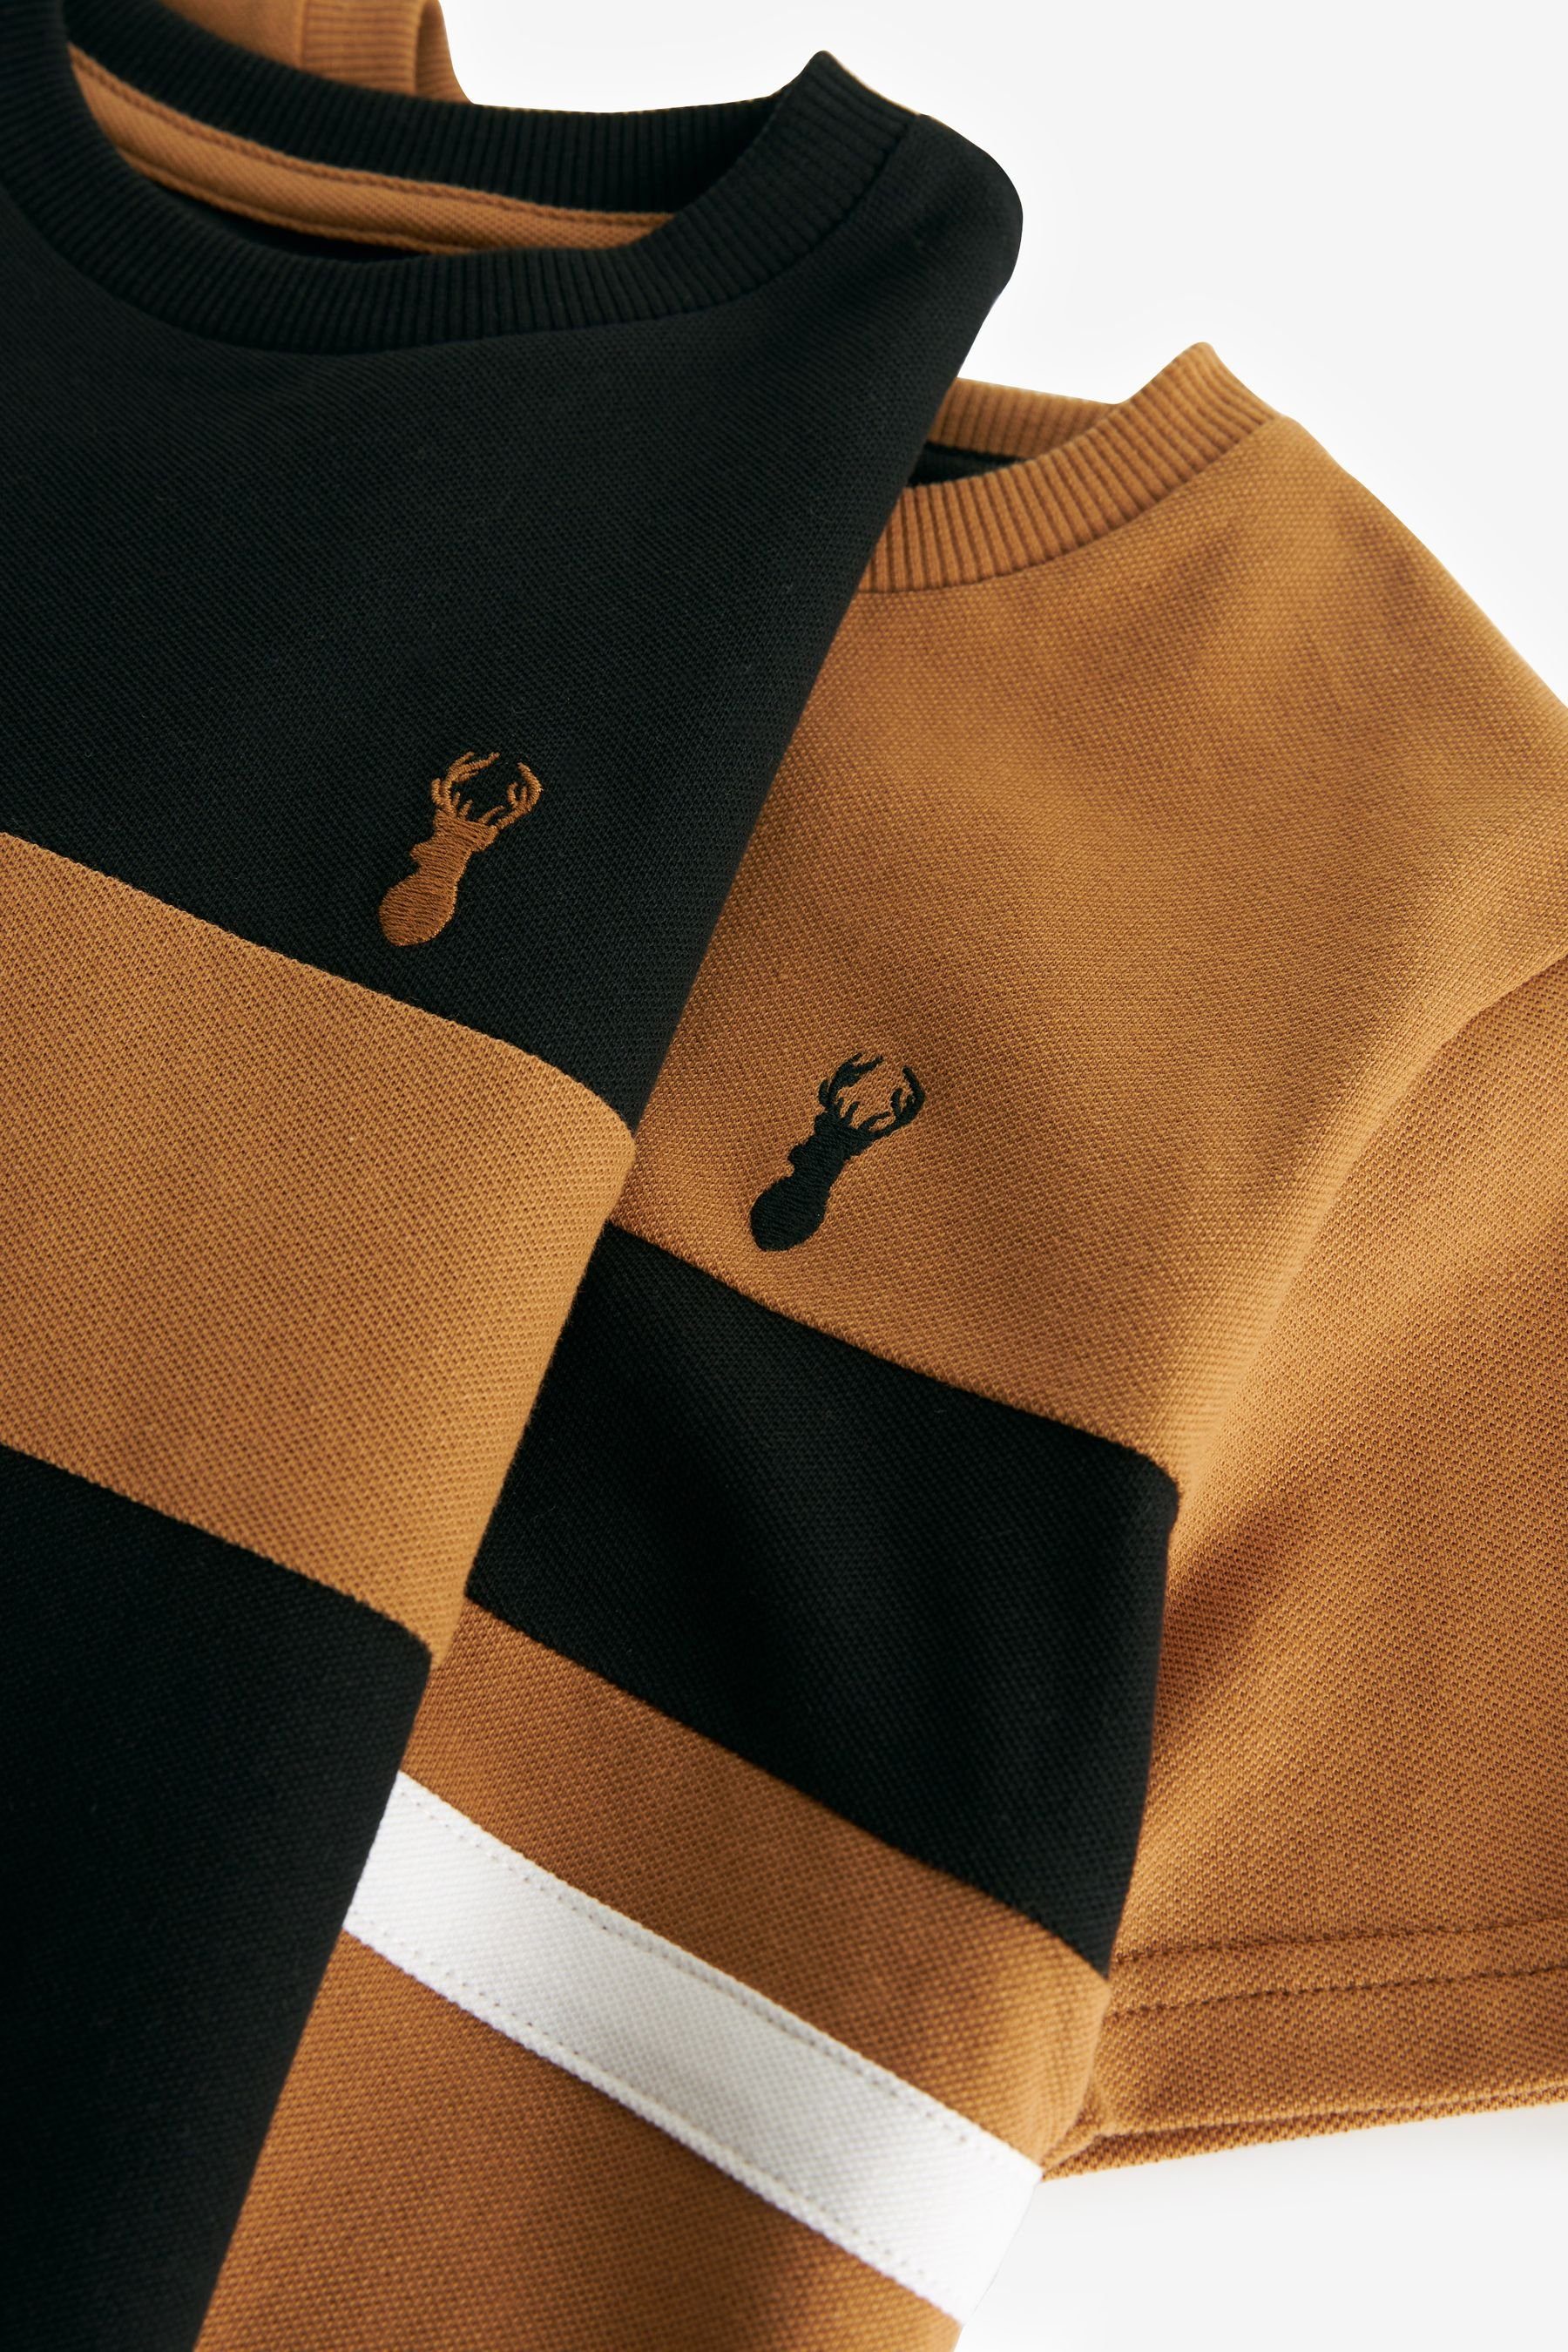 (2-tlg) Brown T-Shirt Next Black/Tan Blockfarbendesign, 2er-Pack Kurzarm-T-Shirt im